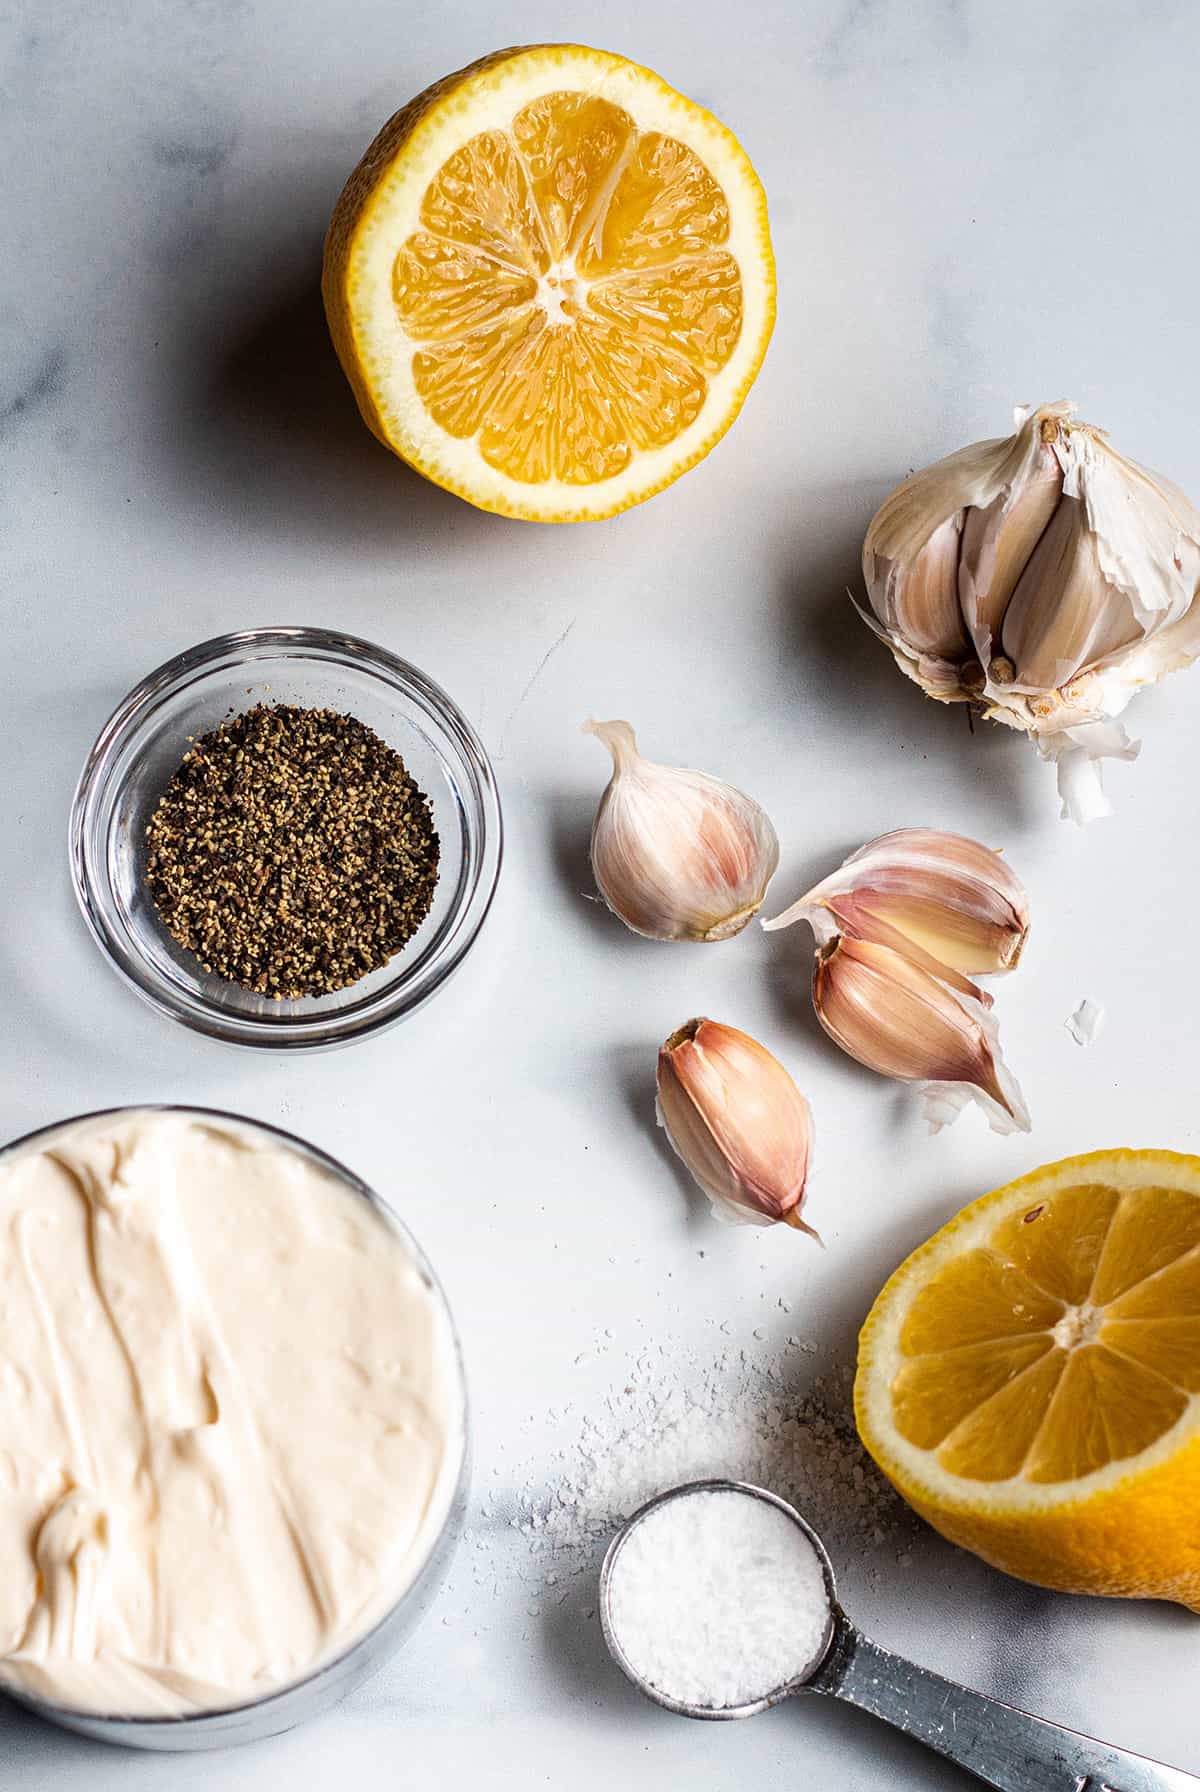 Ingredients for lemon garlic aioli: mayonnaise, lemon, garlic, salt, and pepper.